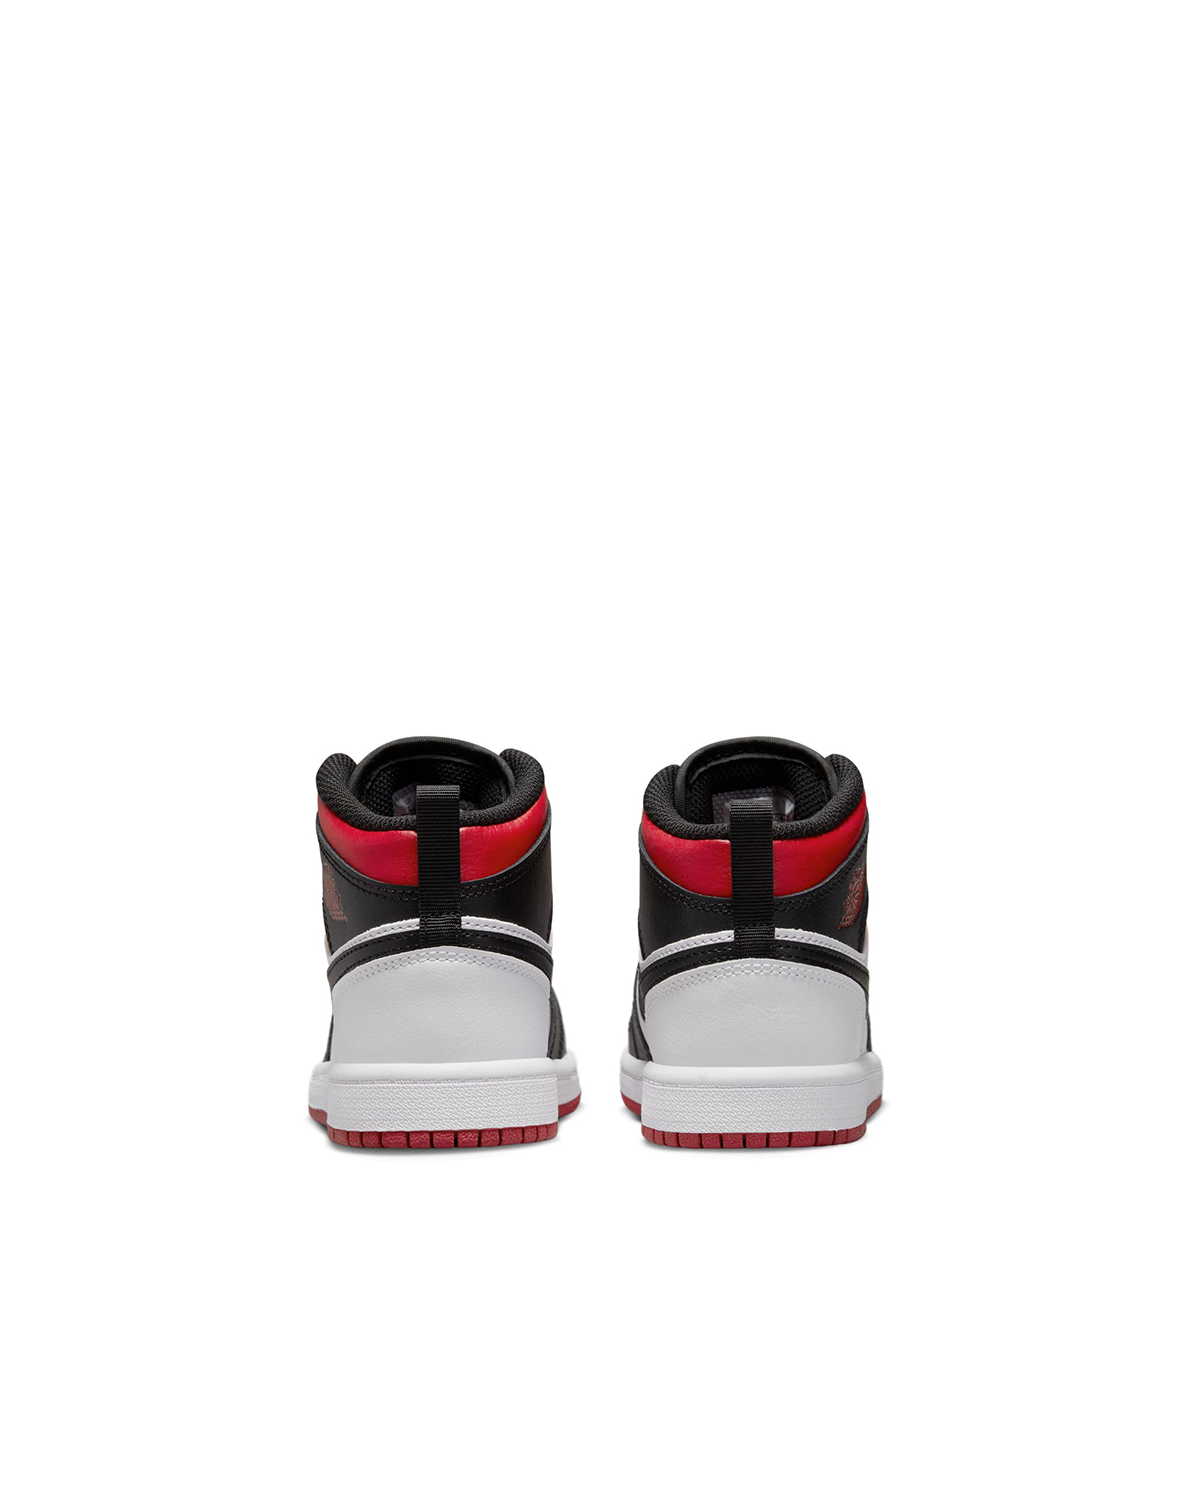 PS Jordan 1 Mid White/Gym Red/Black